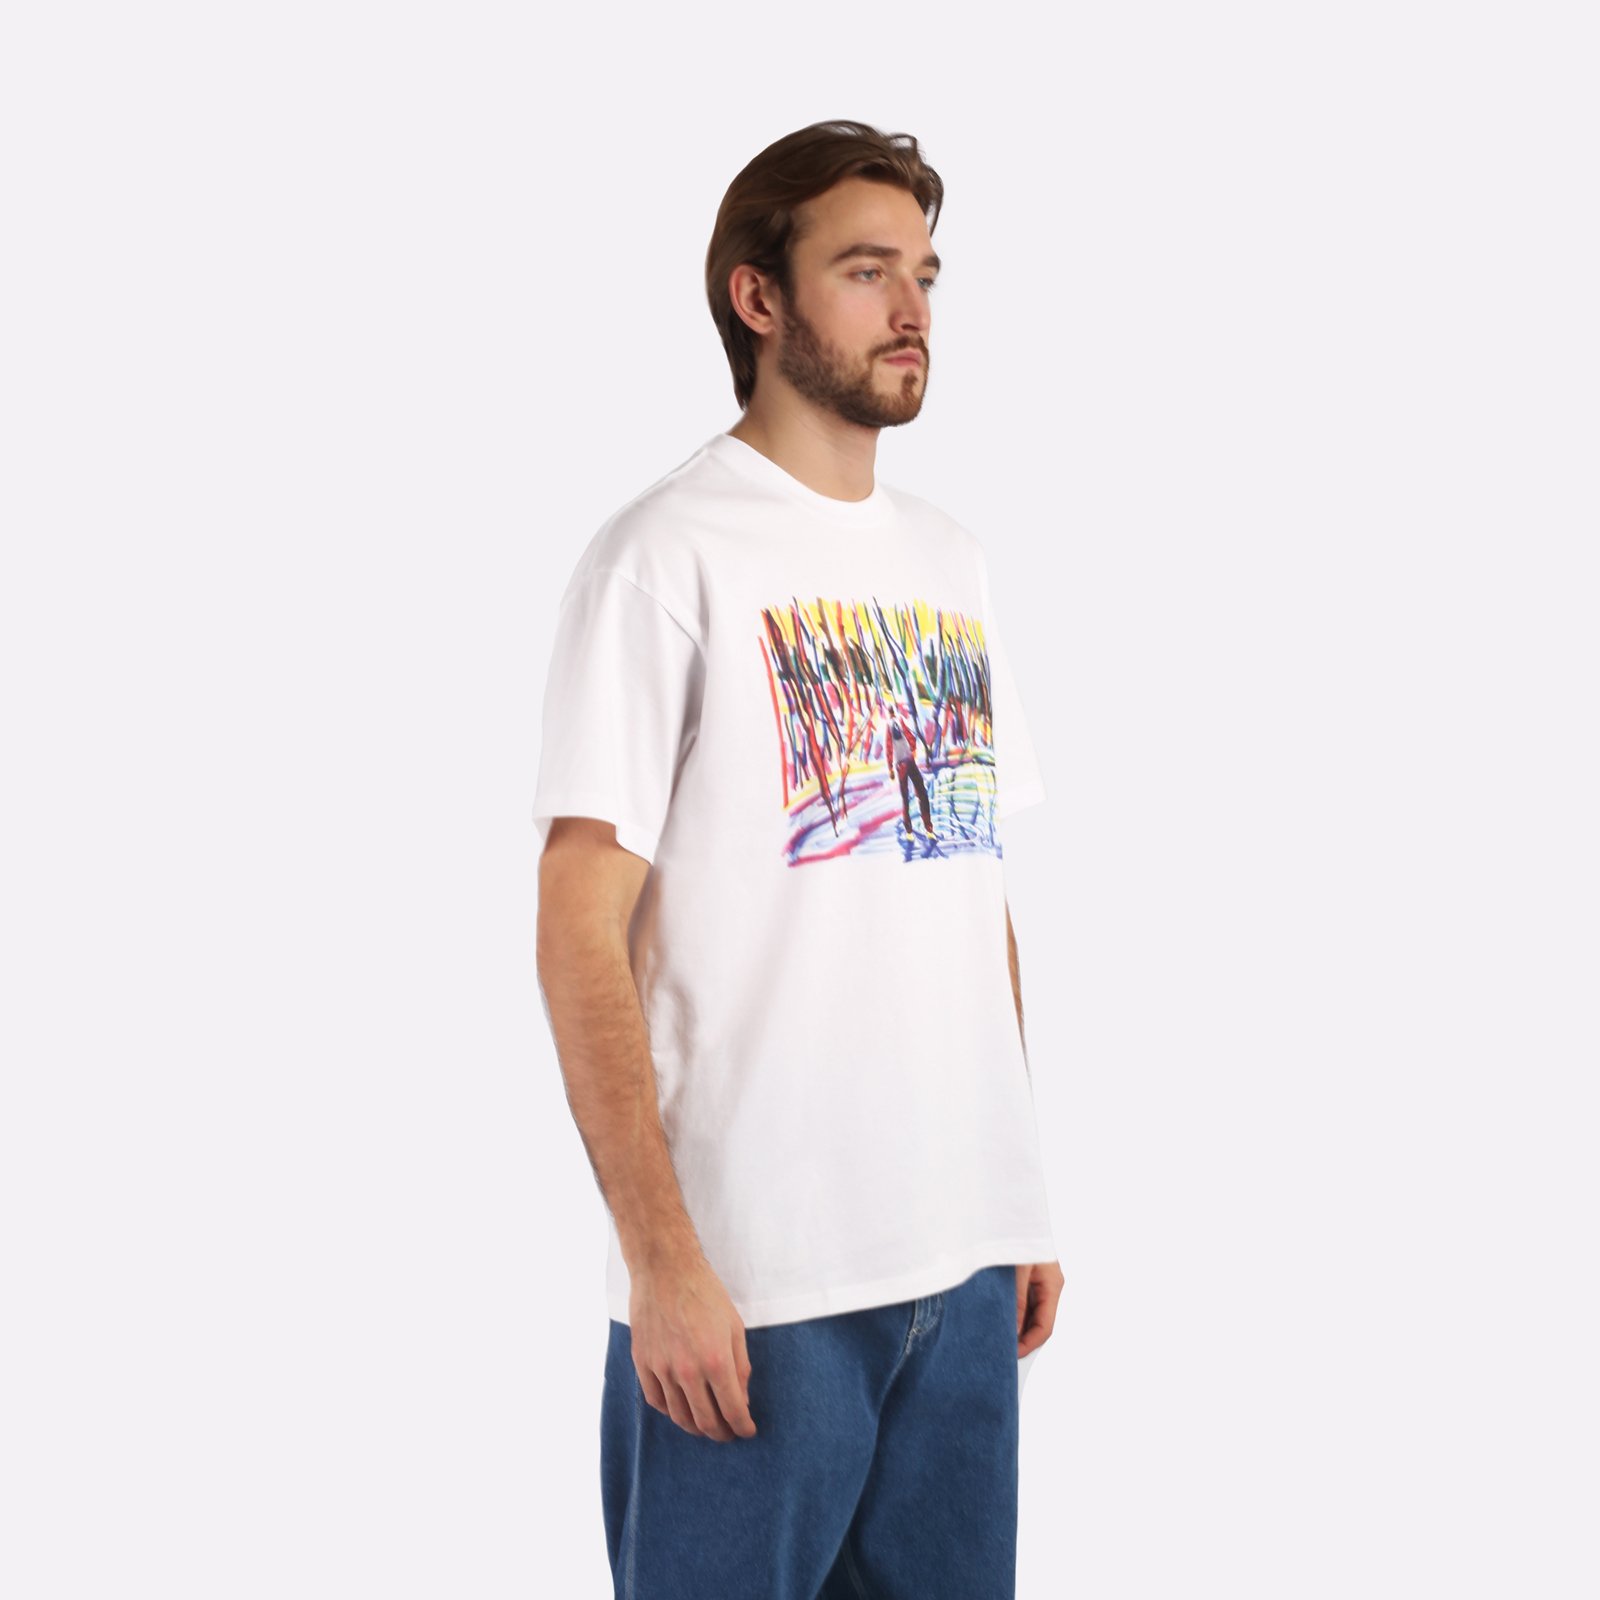 мужская футболка Carhartt WIP S/S Ollie Mac Icy Lake T-S  (I032408-white)  - цена, описание, фото 3